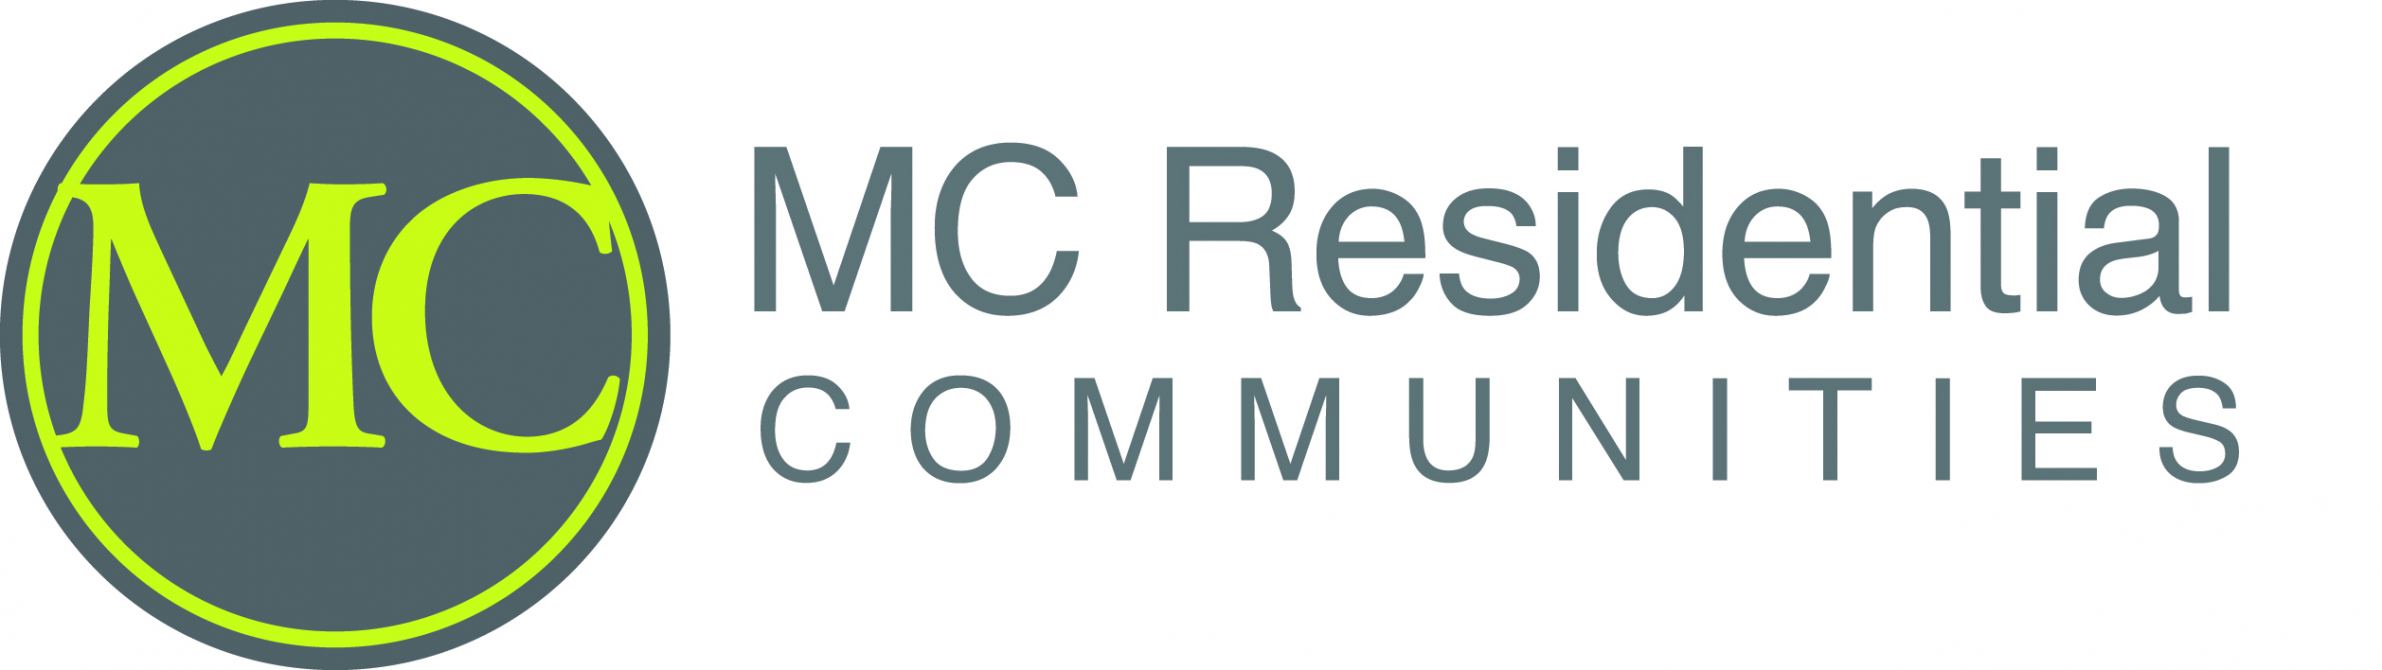 MC Residential Communities